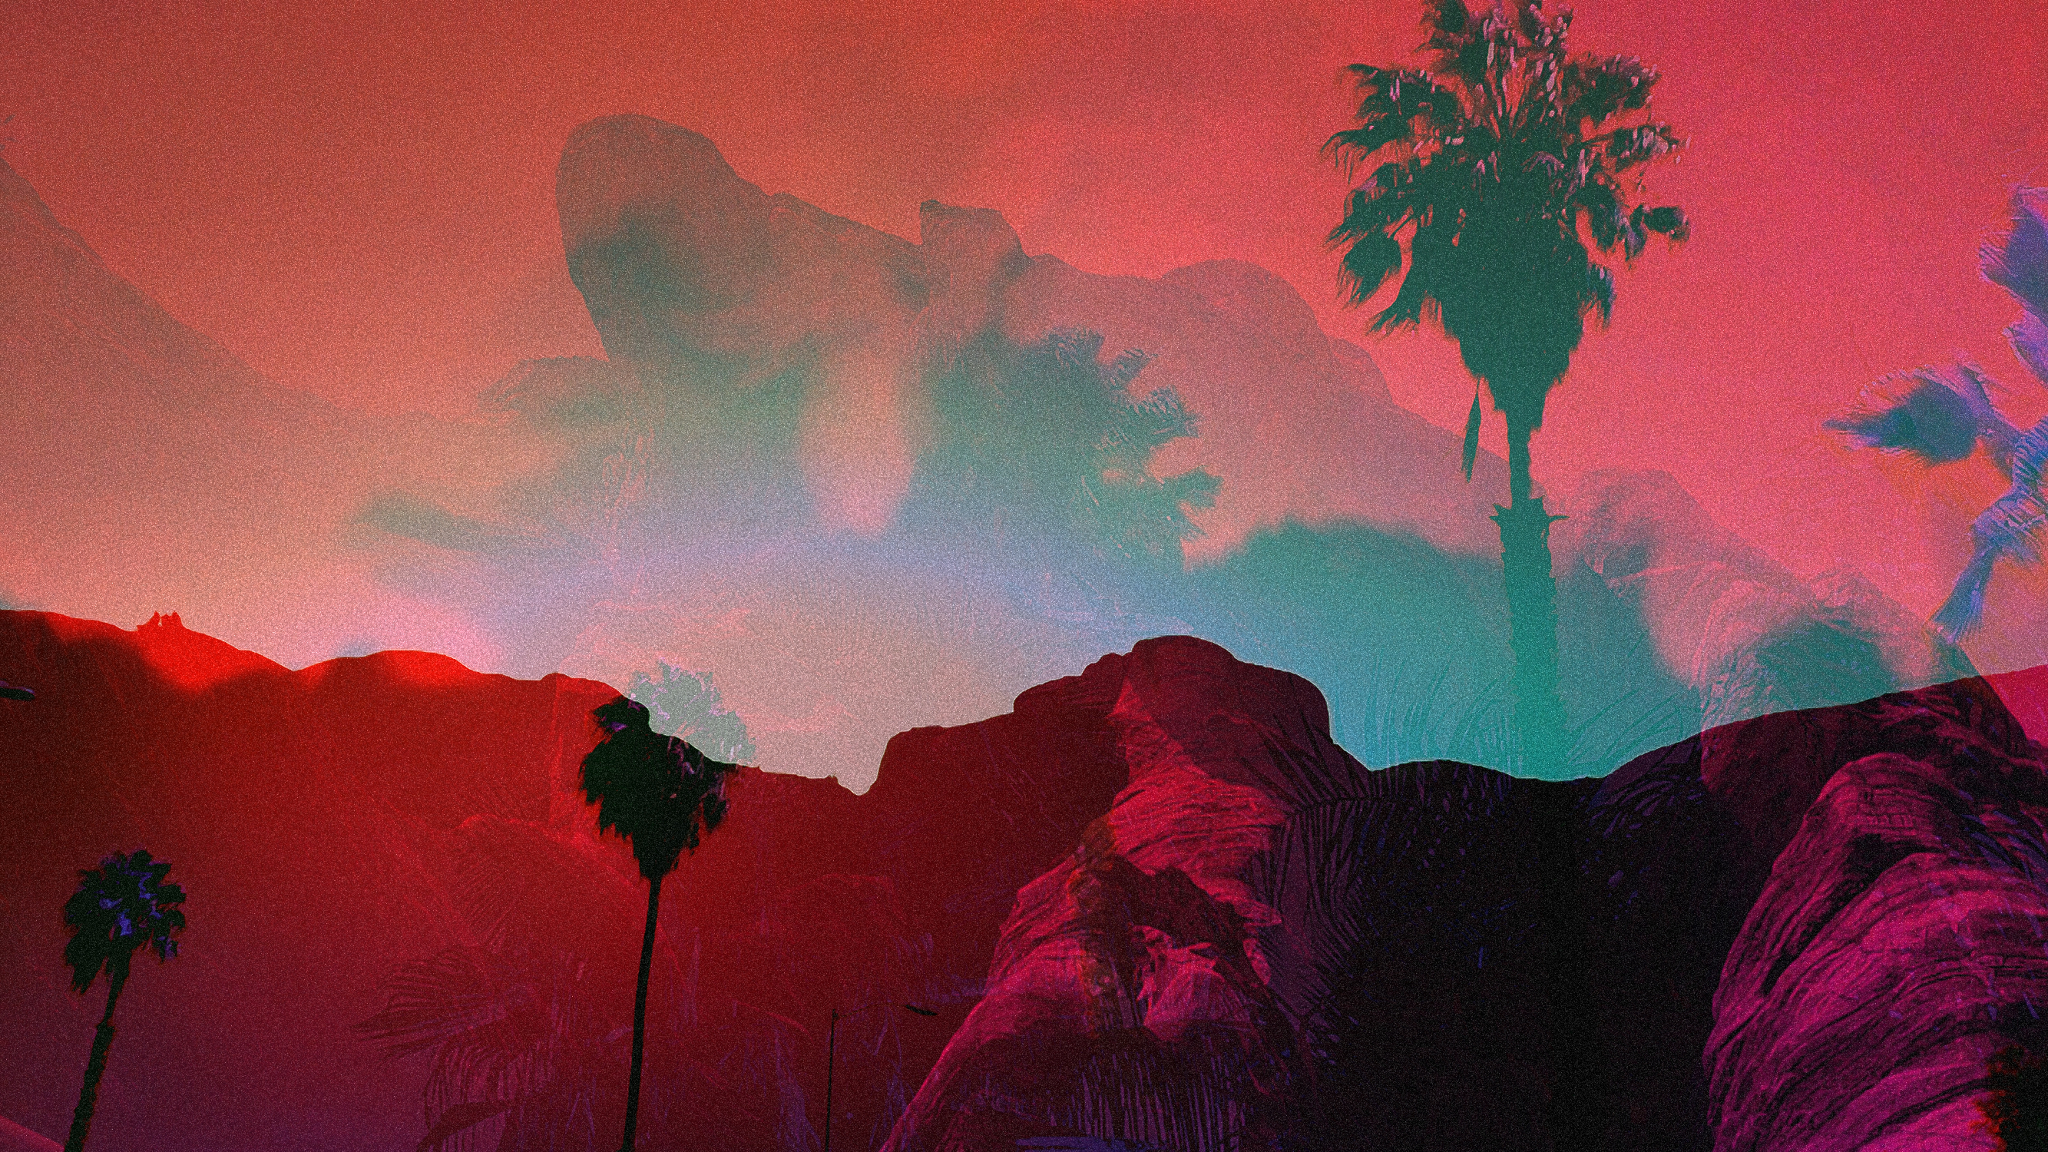 General 2048x1152 palm trees vaporwave digital art colorful rocks